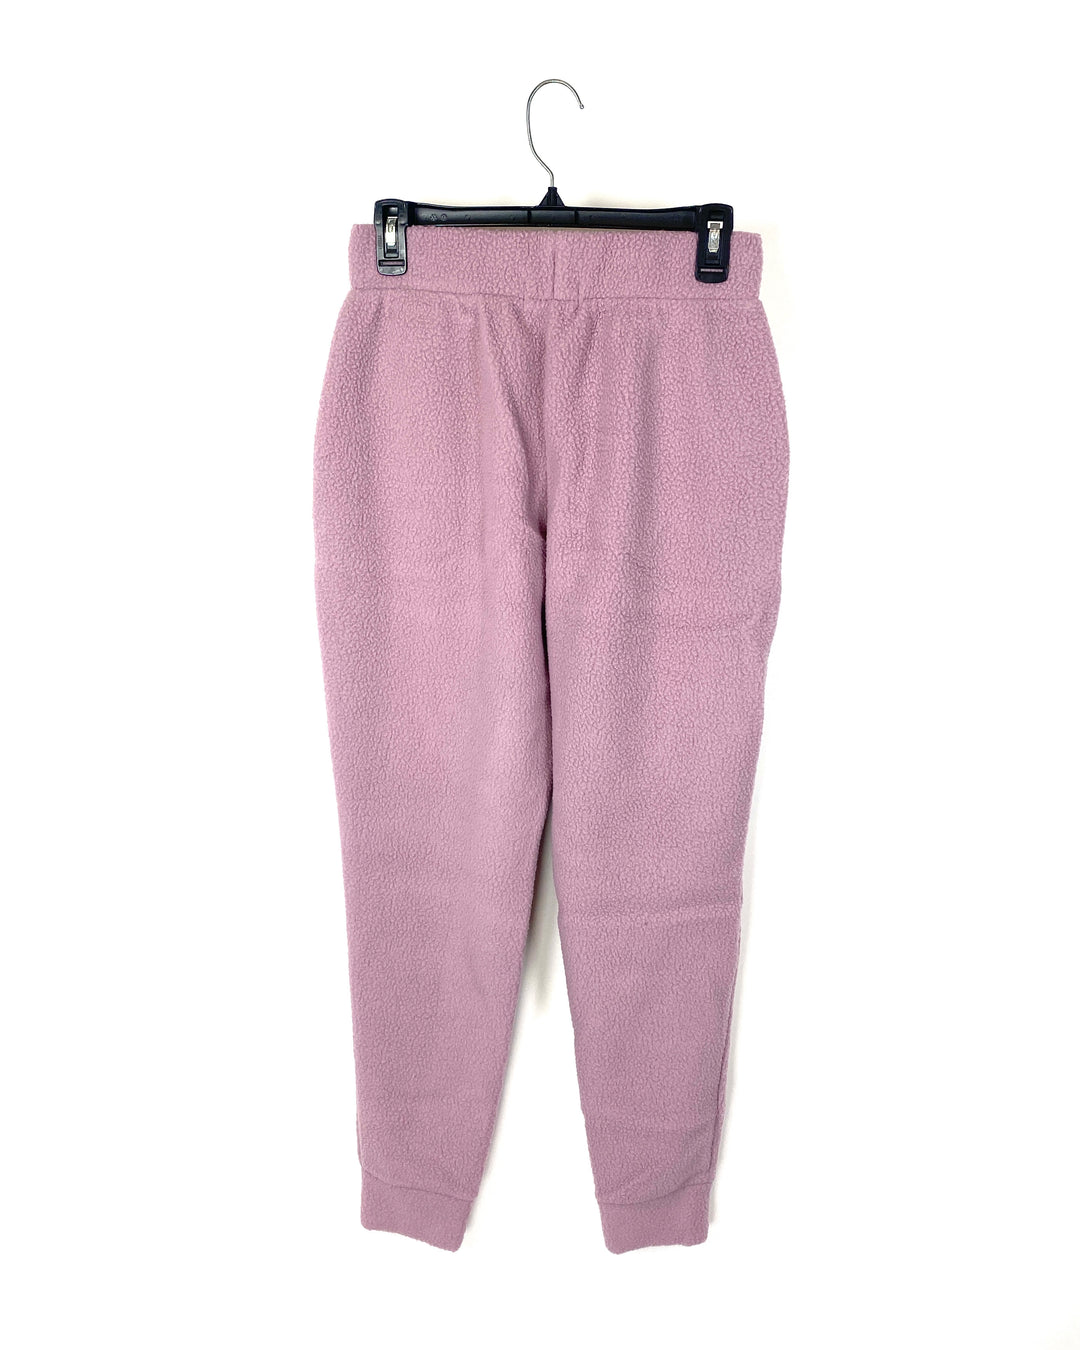 Pink Sweatpants - Small